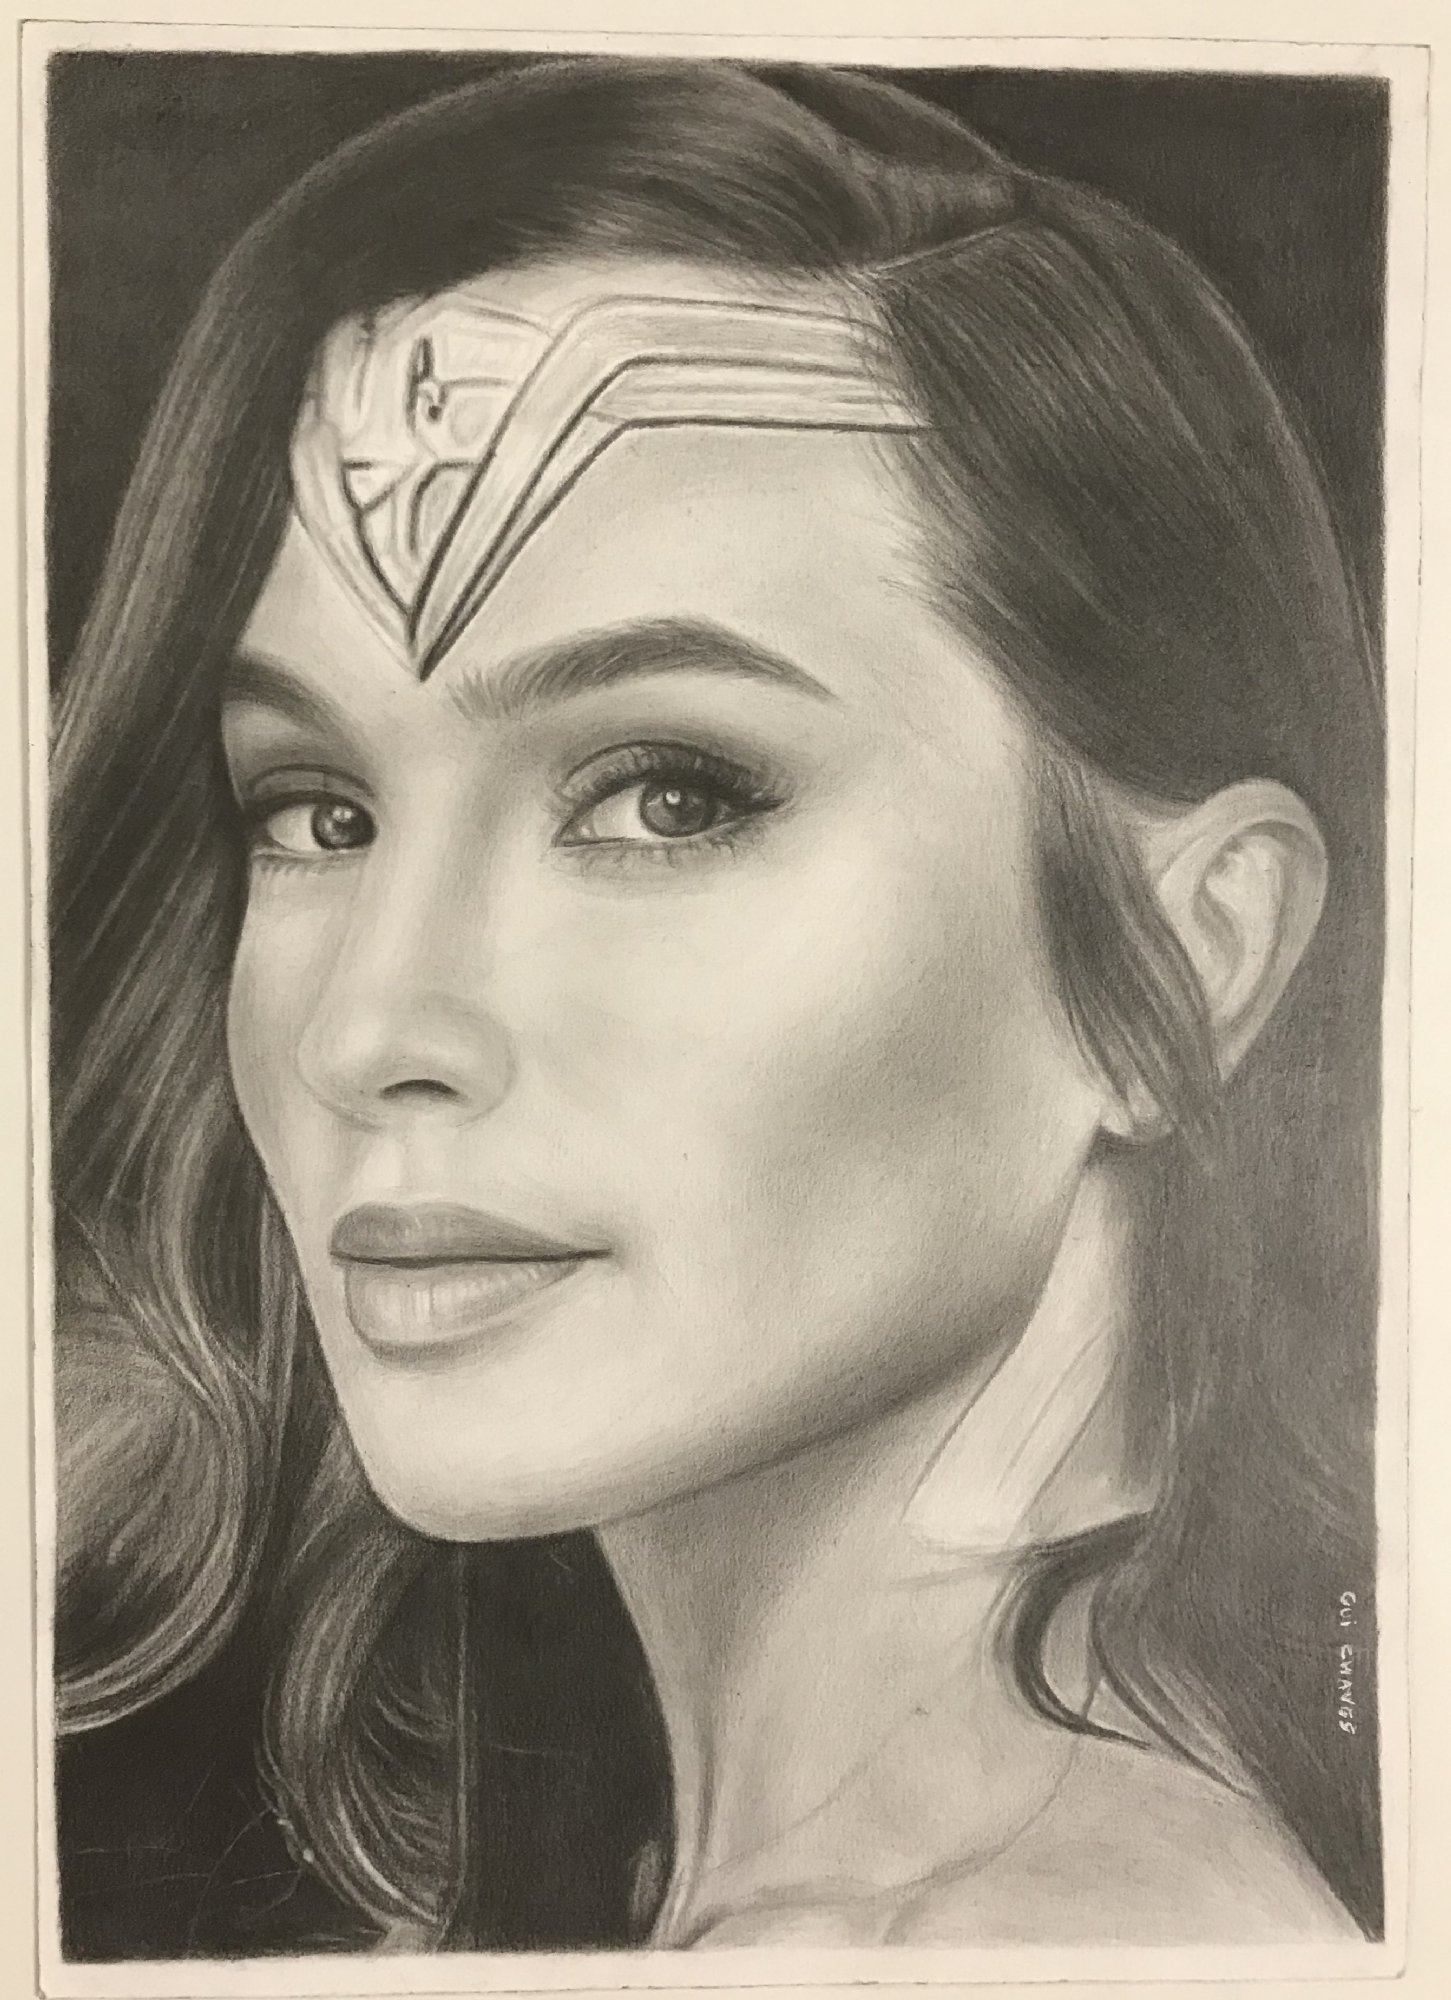 Wonder Woman Gal Gadot Sketch By Gui Chaves In Ron Chmiels Rons Original Art Comic Art